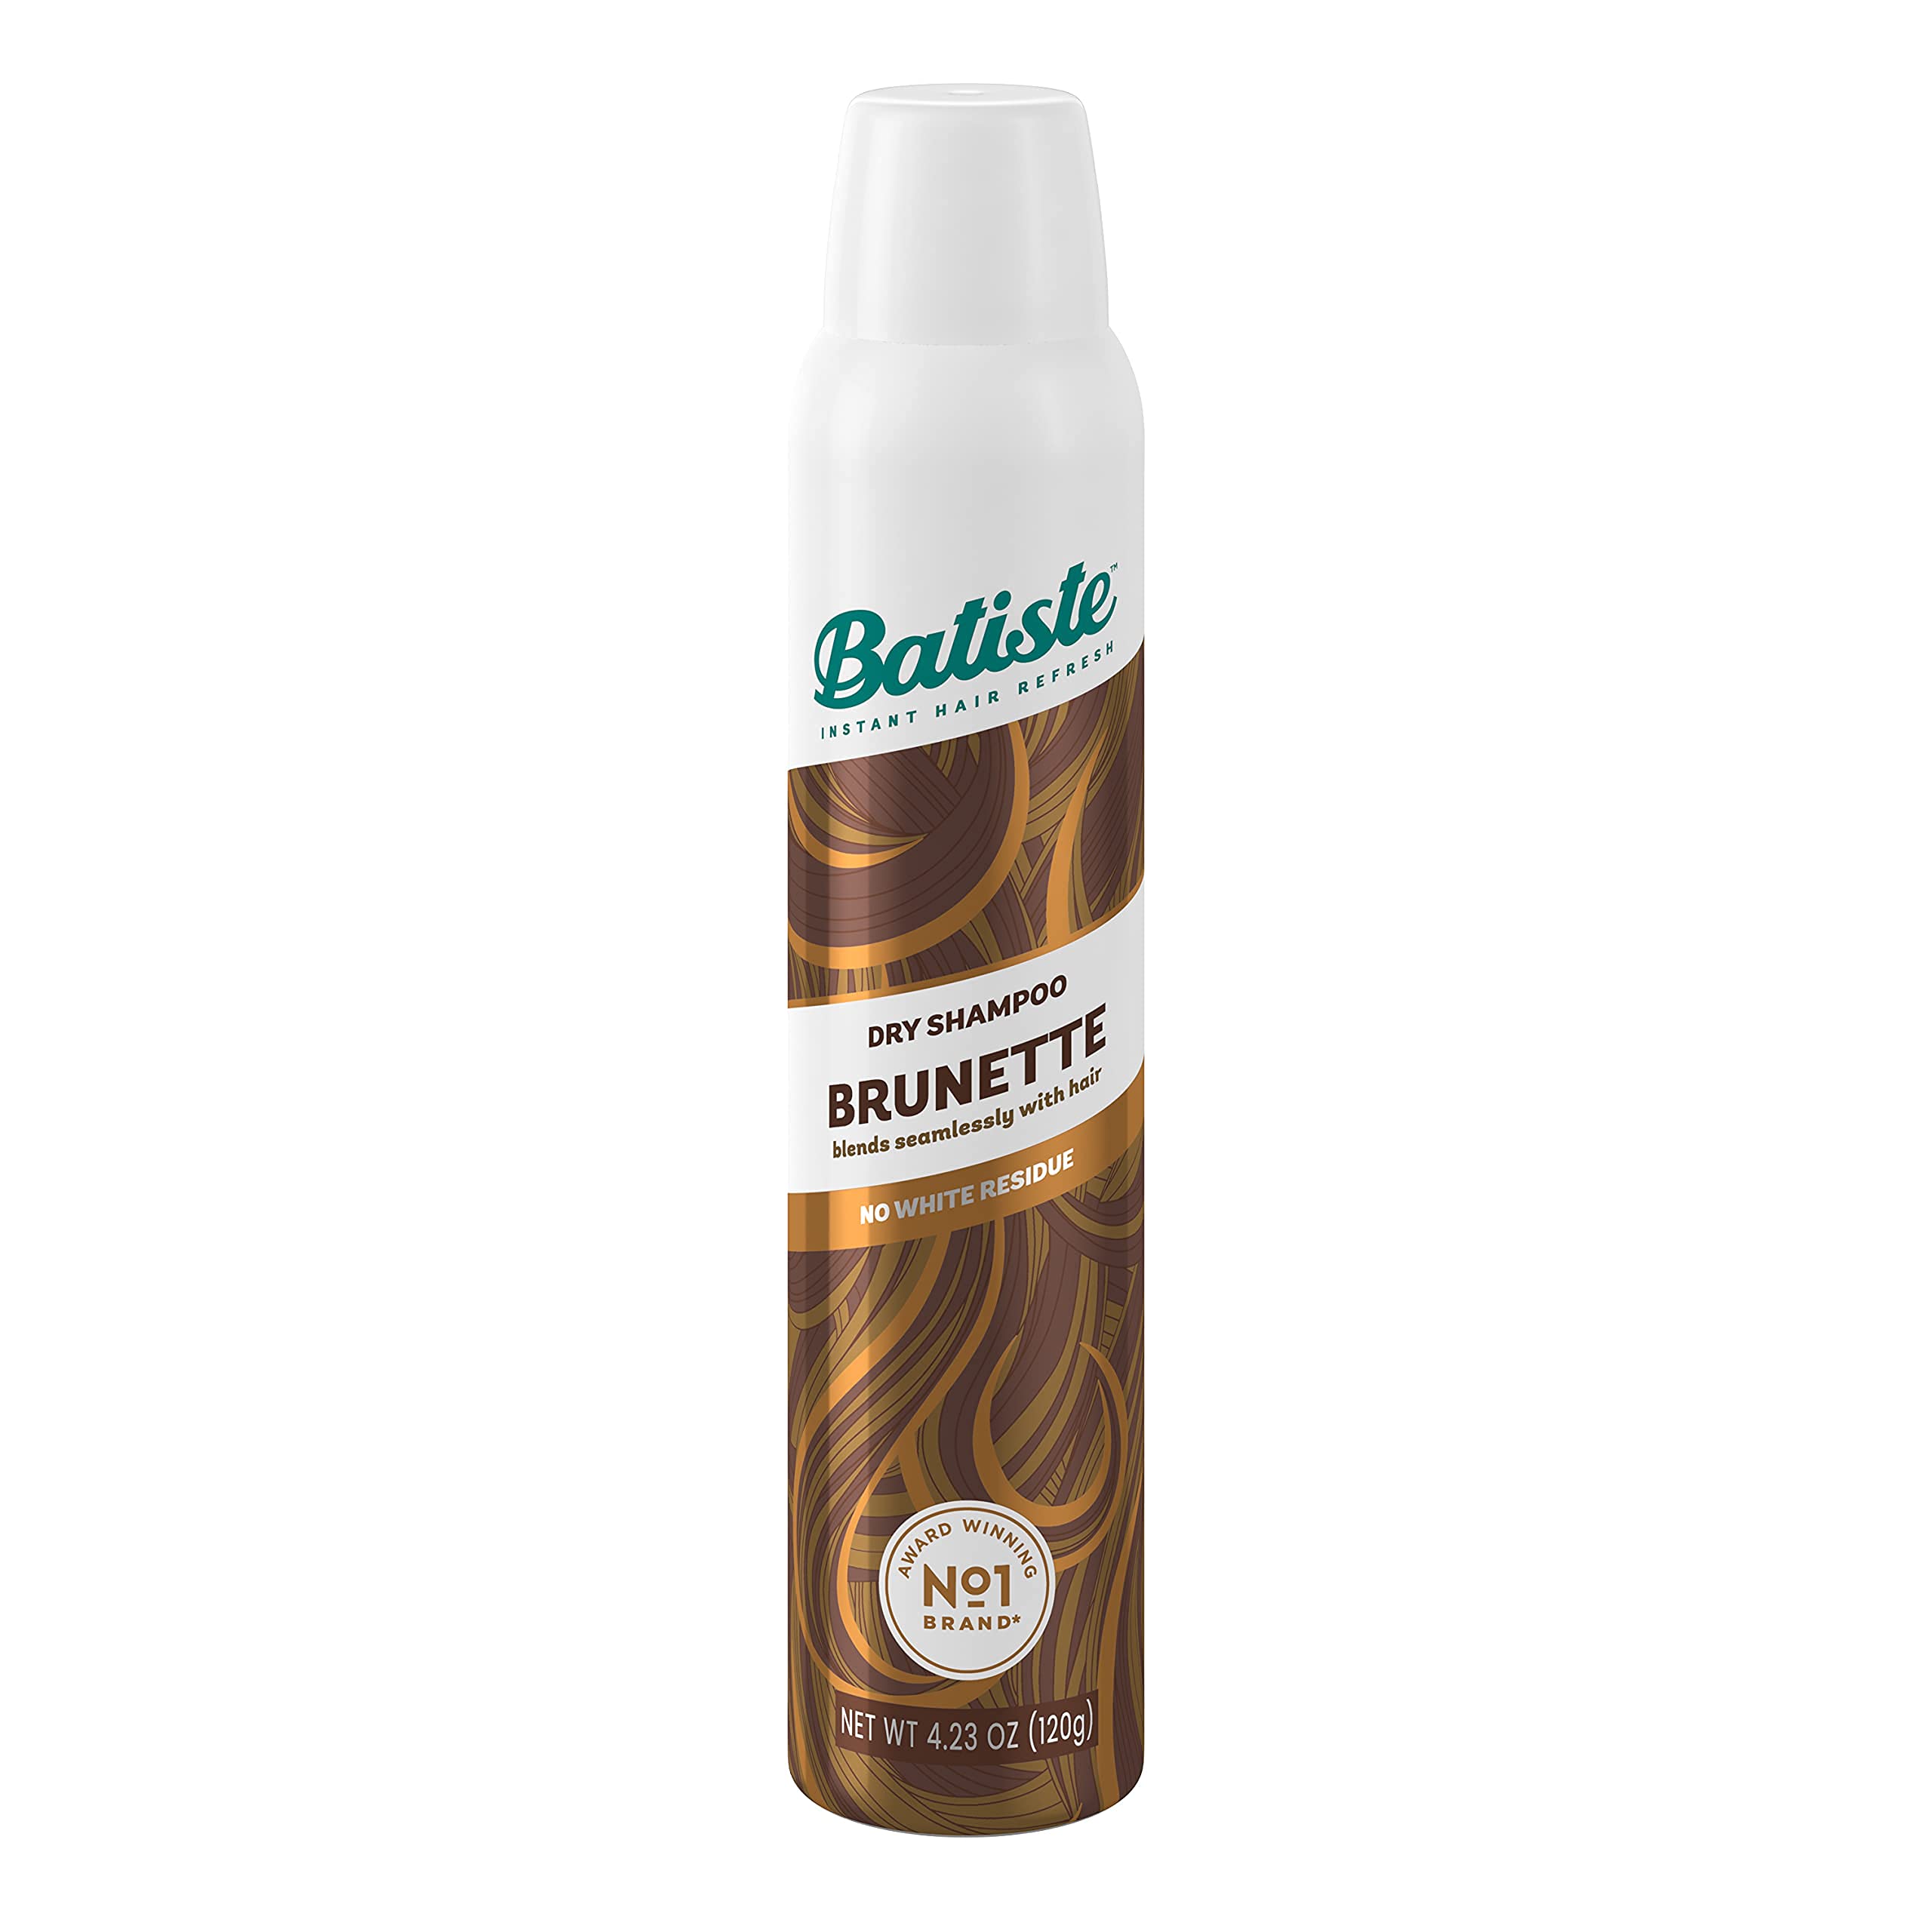 Batiste Dry Shampoo Plus 6.73oz Beautiful Brunette (2 Pack)